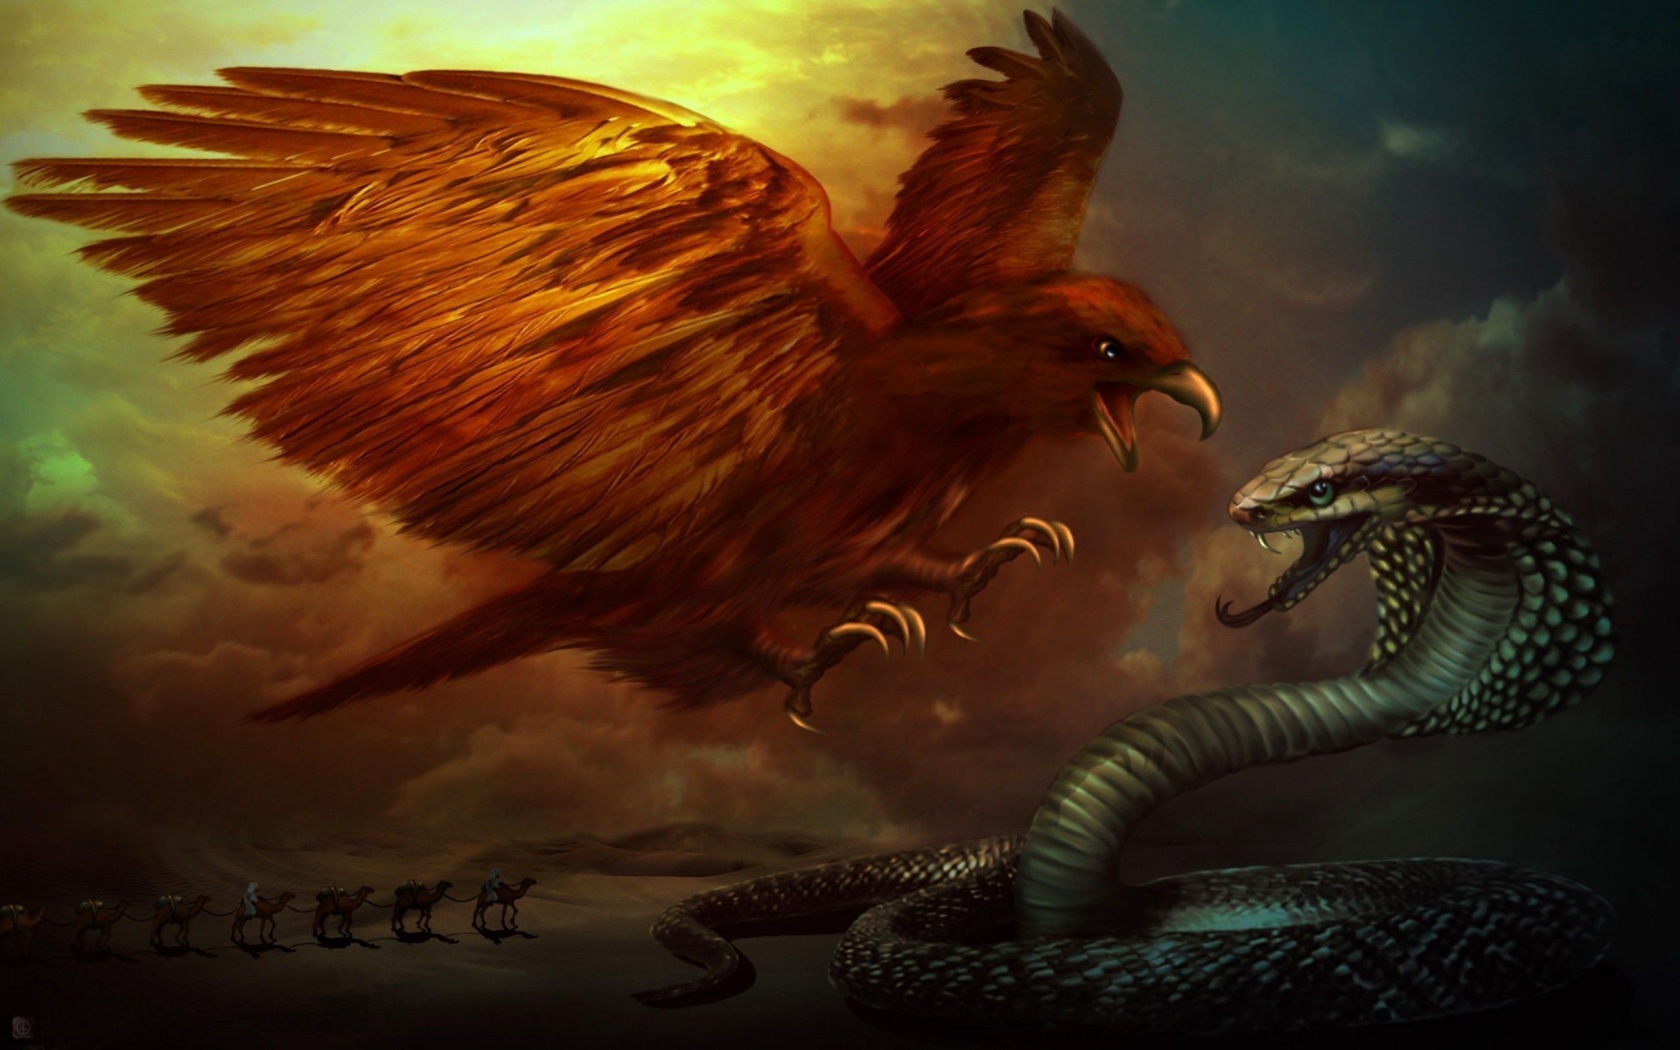 Battle Of Eagle And Cobra